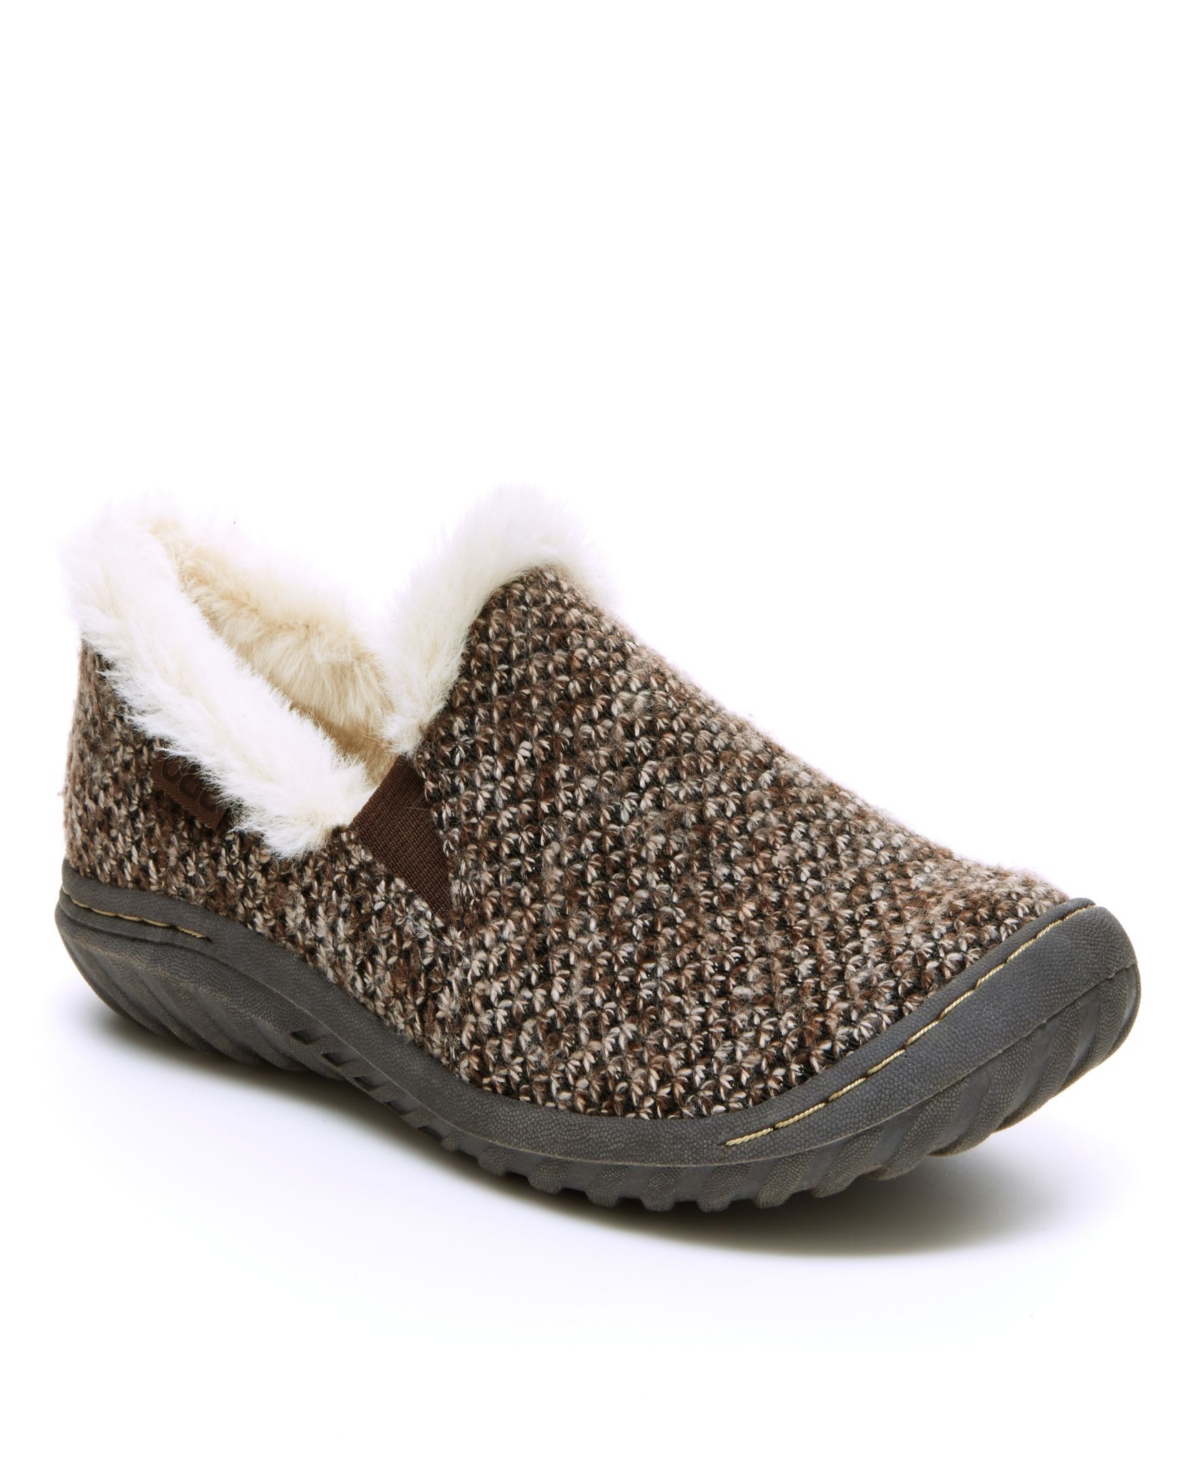 Jbu Willow Knit Casual Shoe In Brown